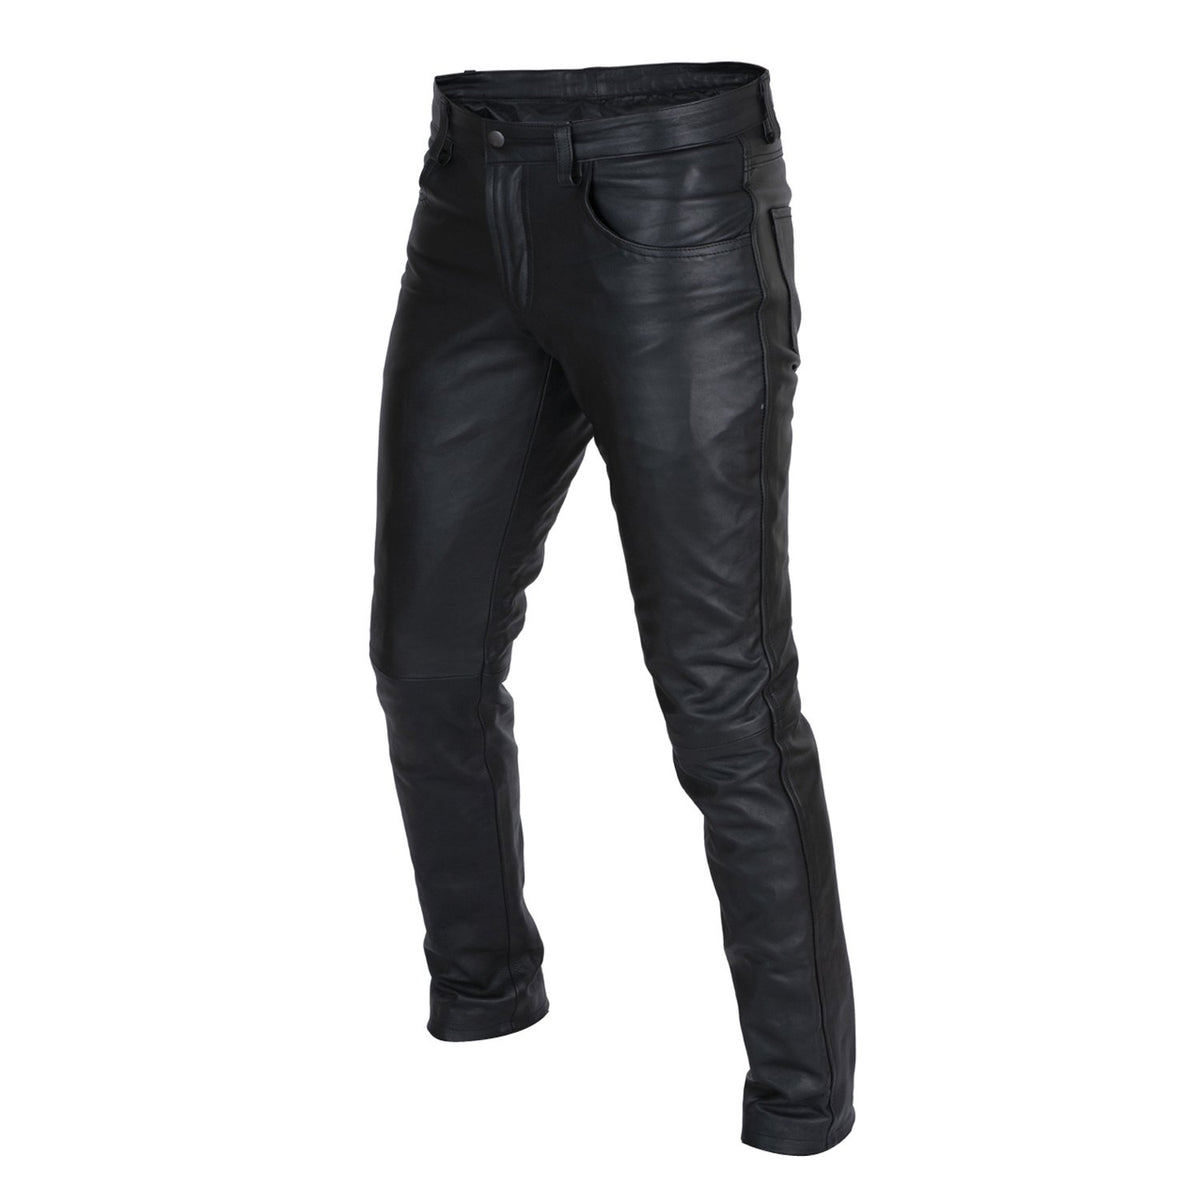 Black Leather Pants (Petite) Side Zipper